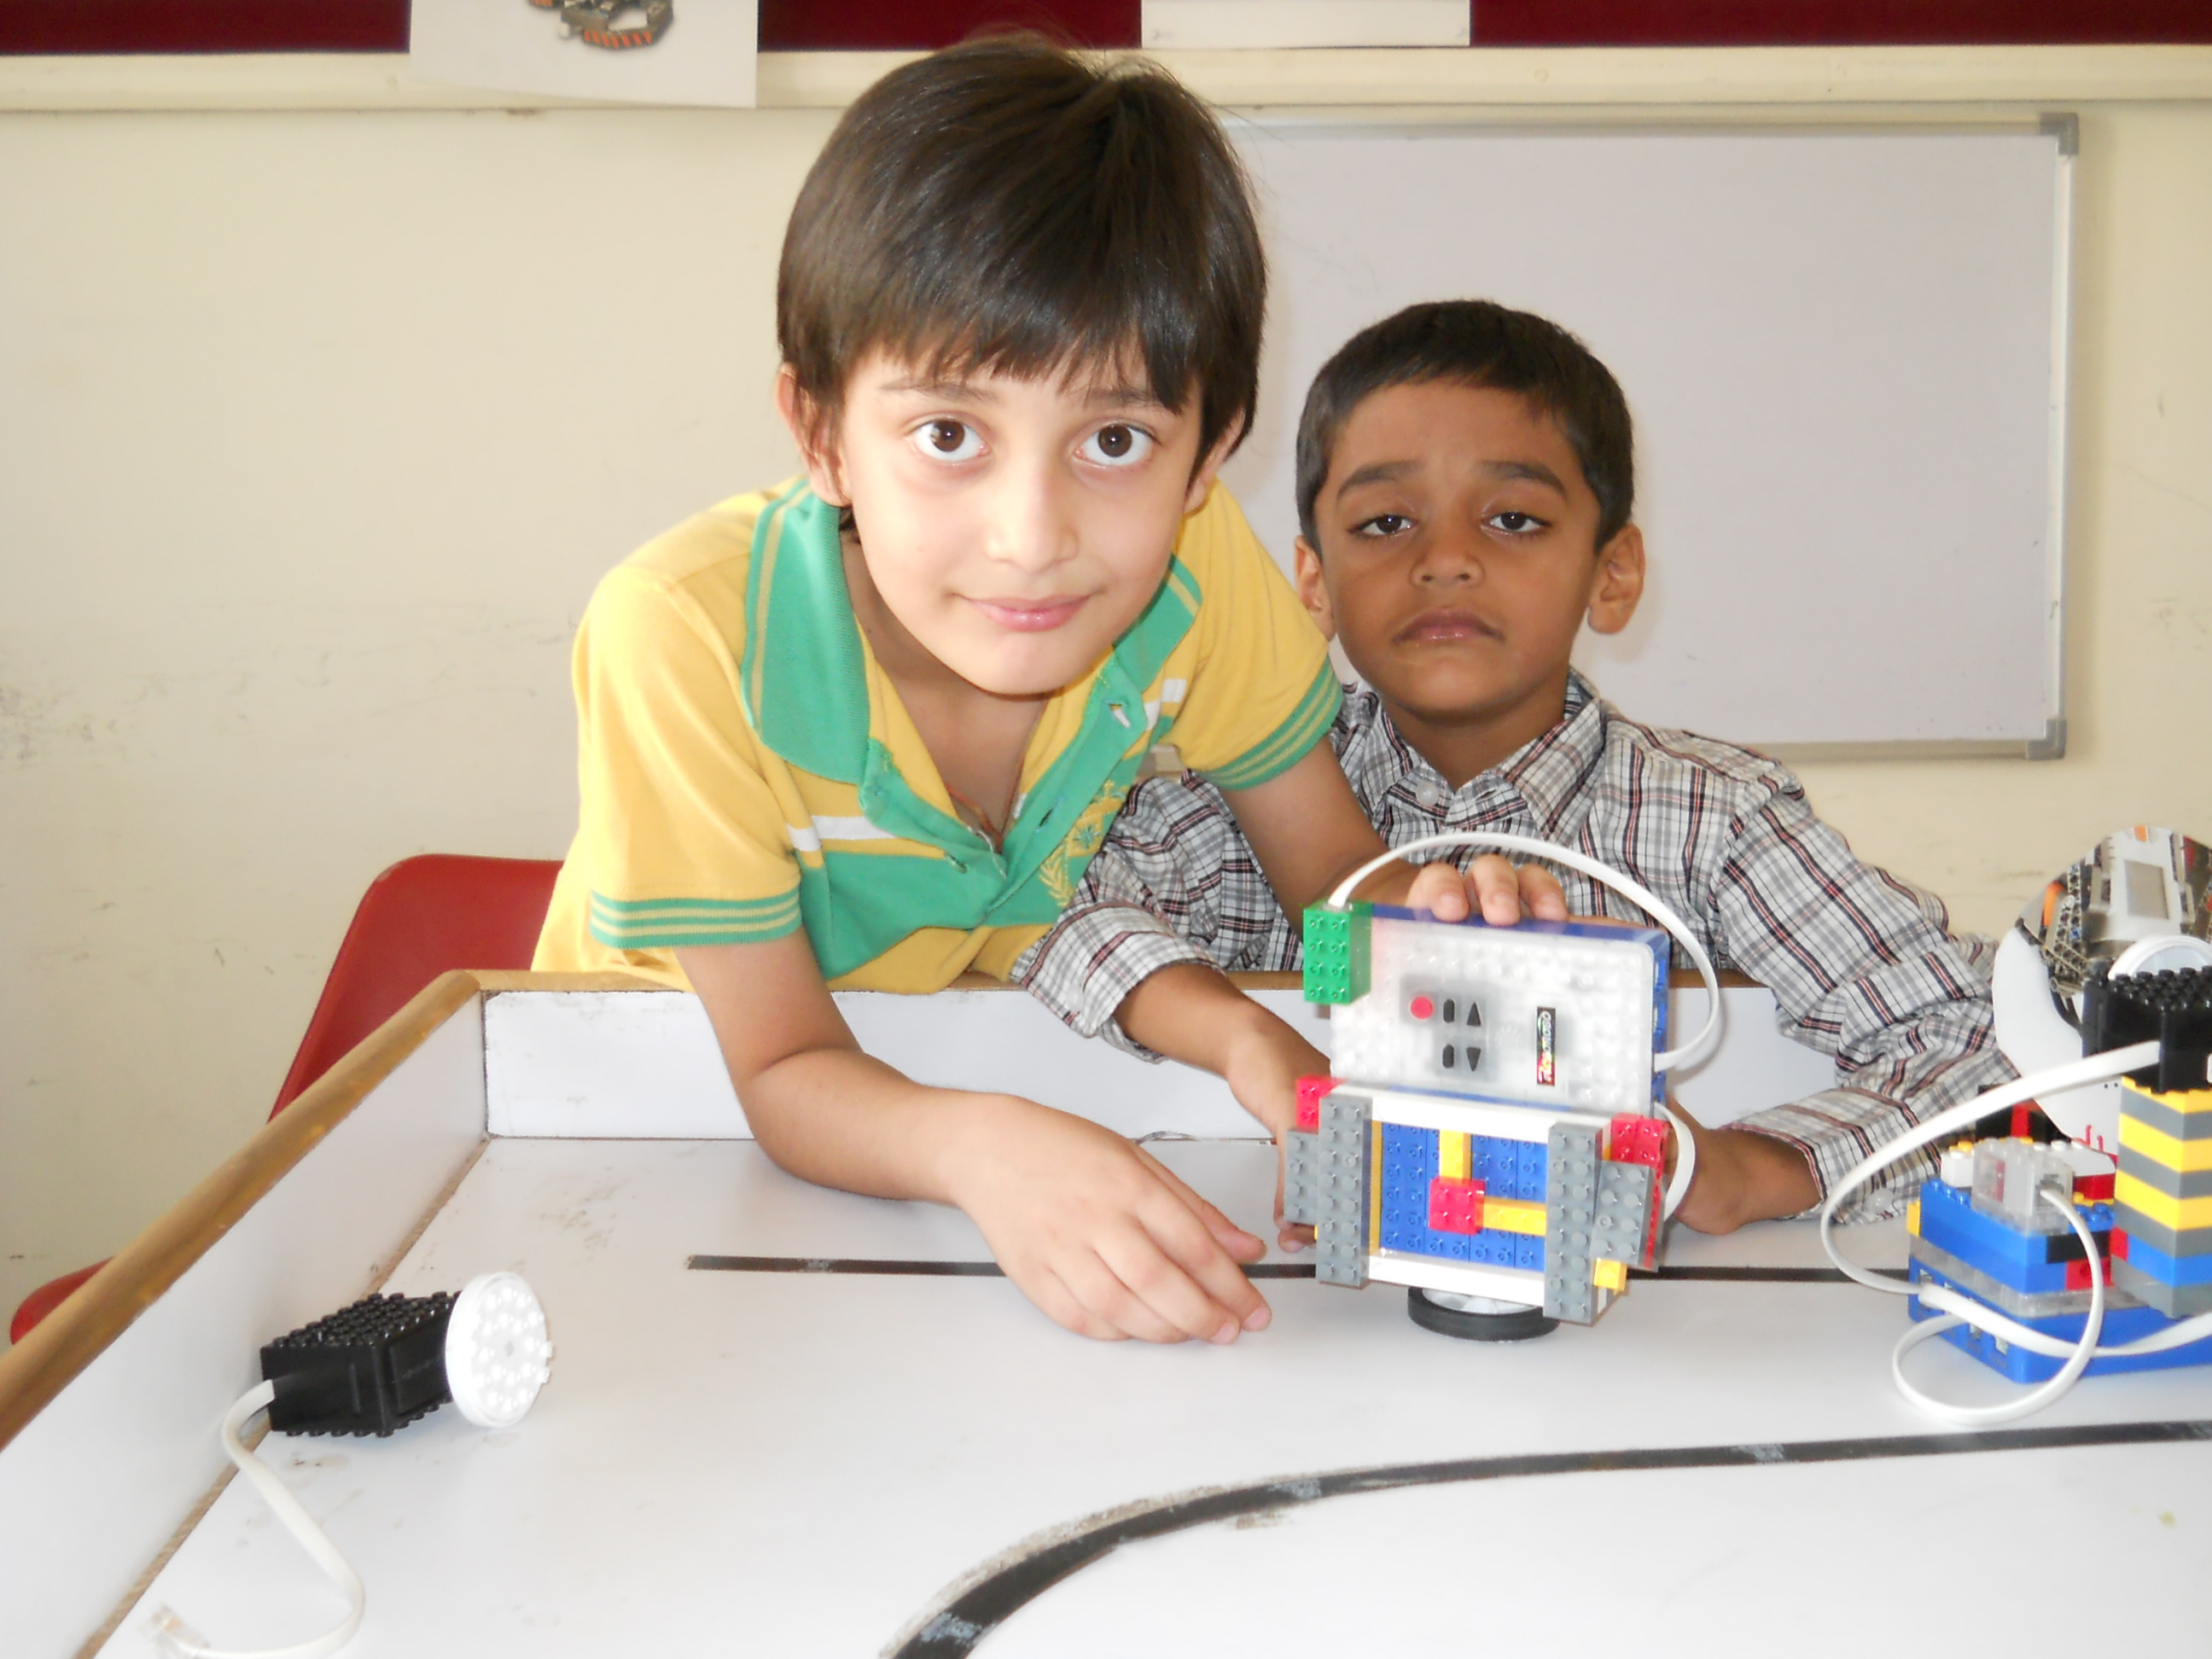 robotics and science classes for kids in Gurgaon)Haryana)Education and LearningWorkshopsGurgaonSushant Lok